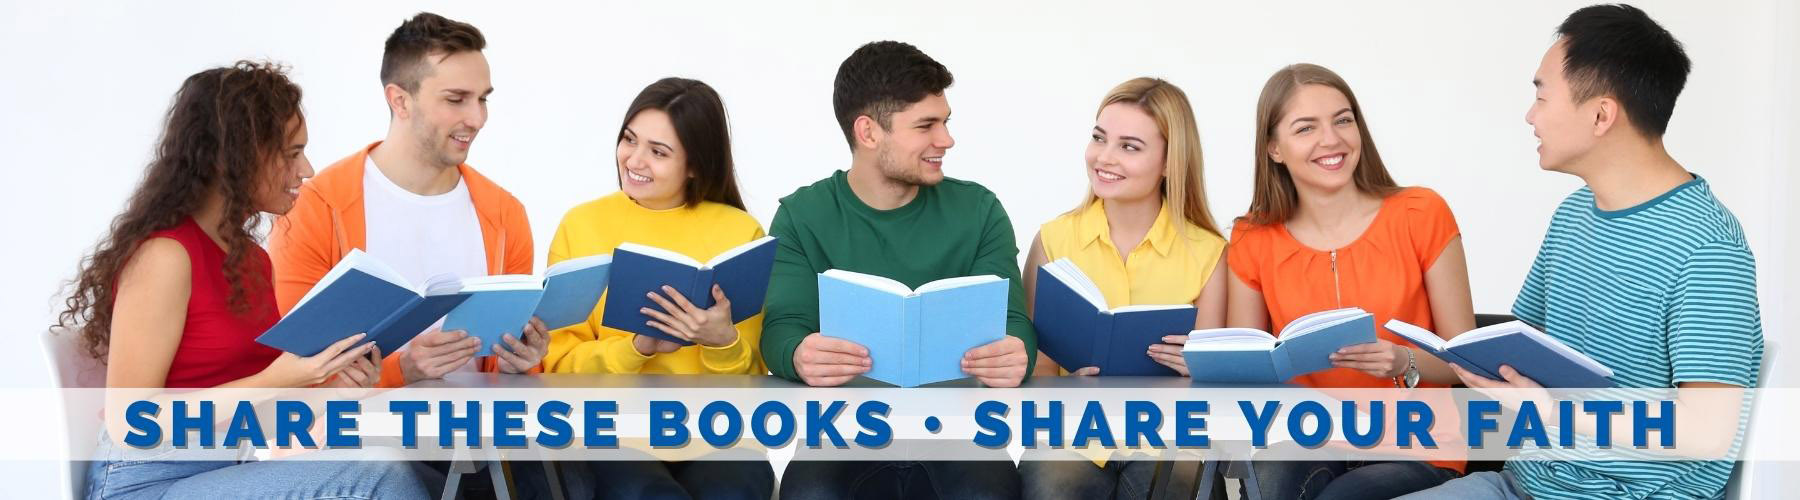 Share These Books - Share Your Faith